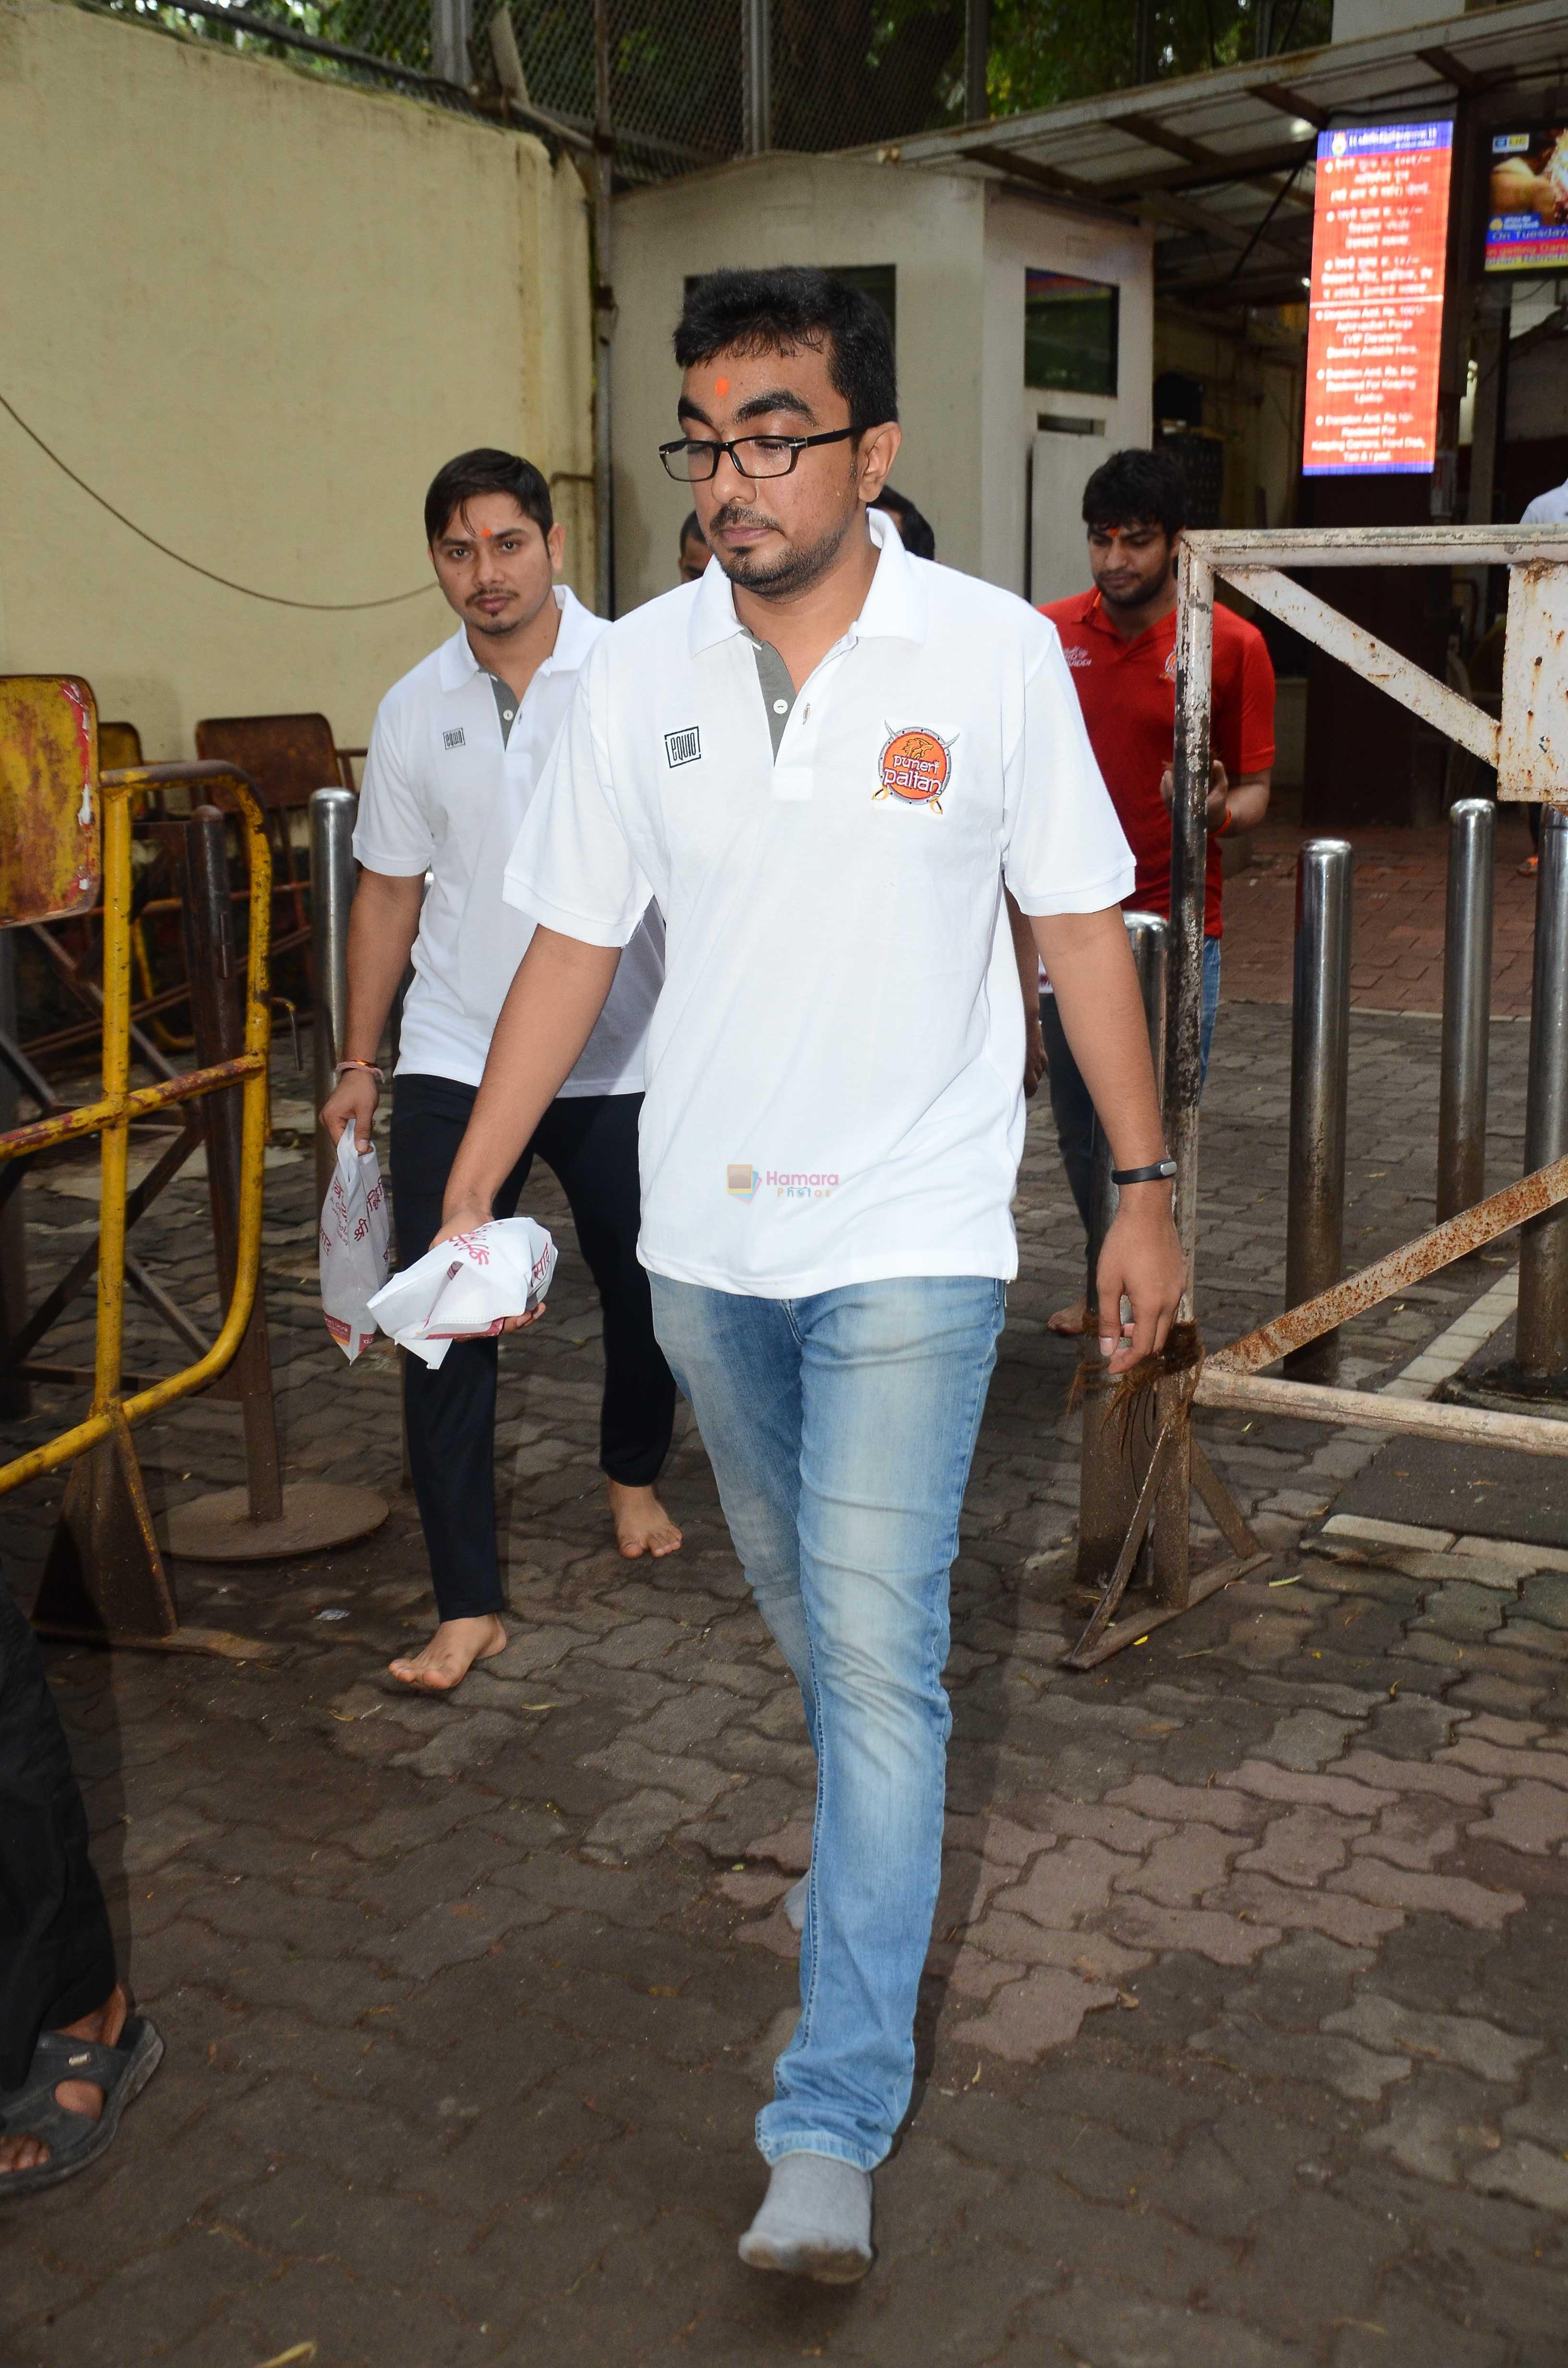 Puneri Paltan visits Siddhivinayak Temple, Mumbai on July 20, 2016